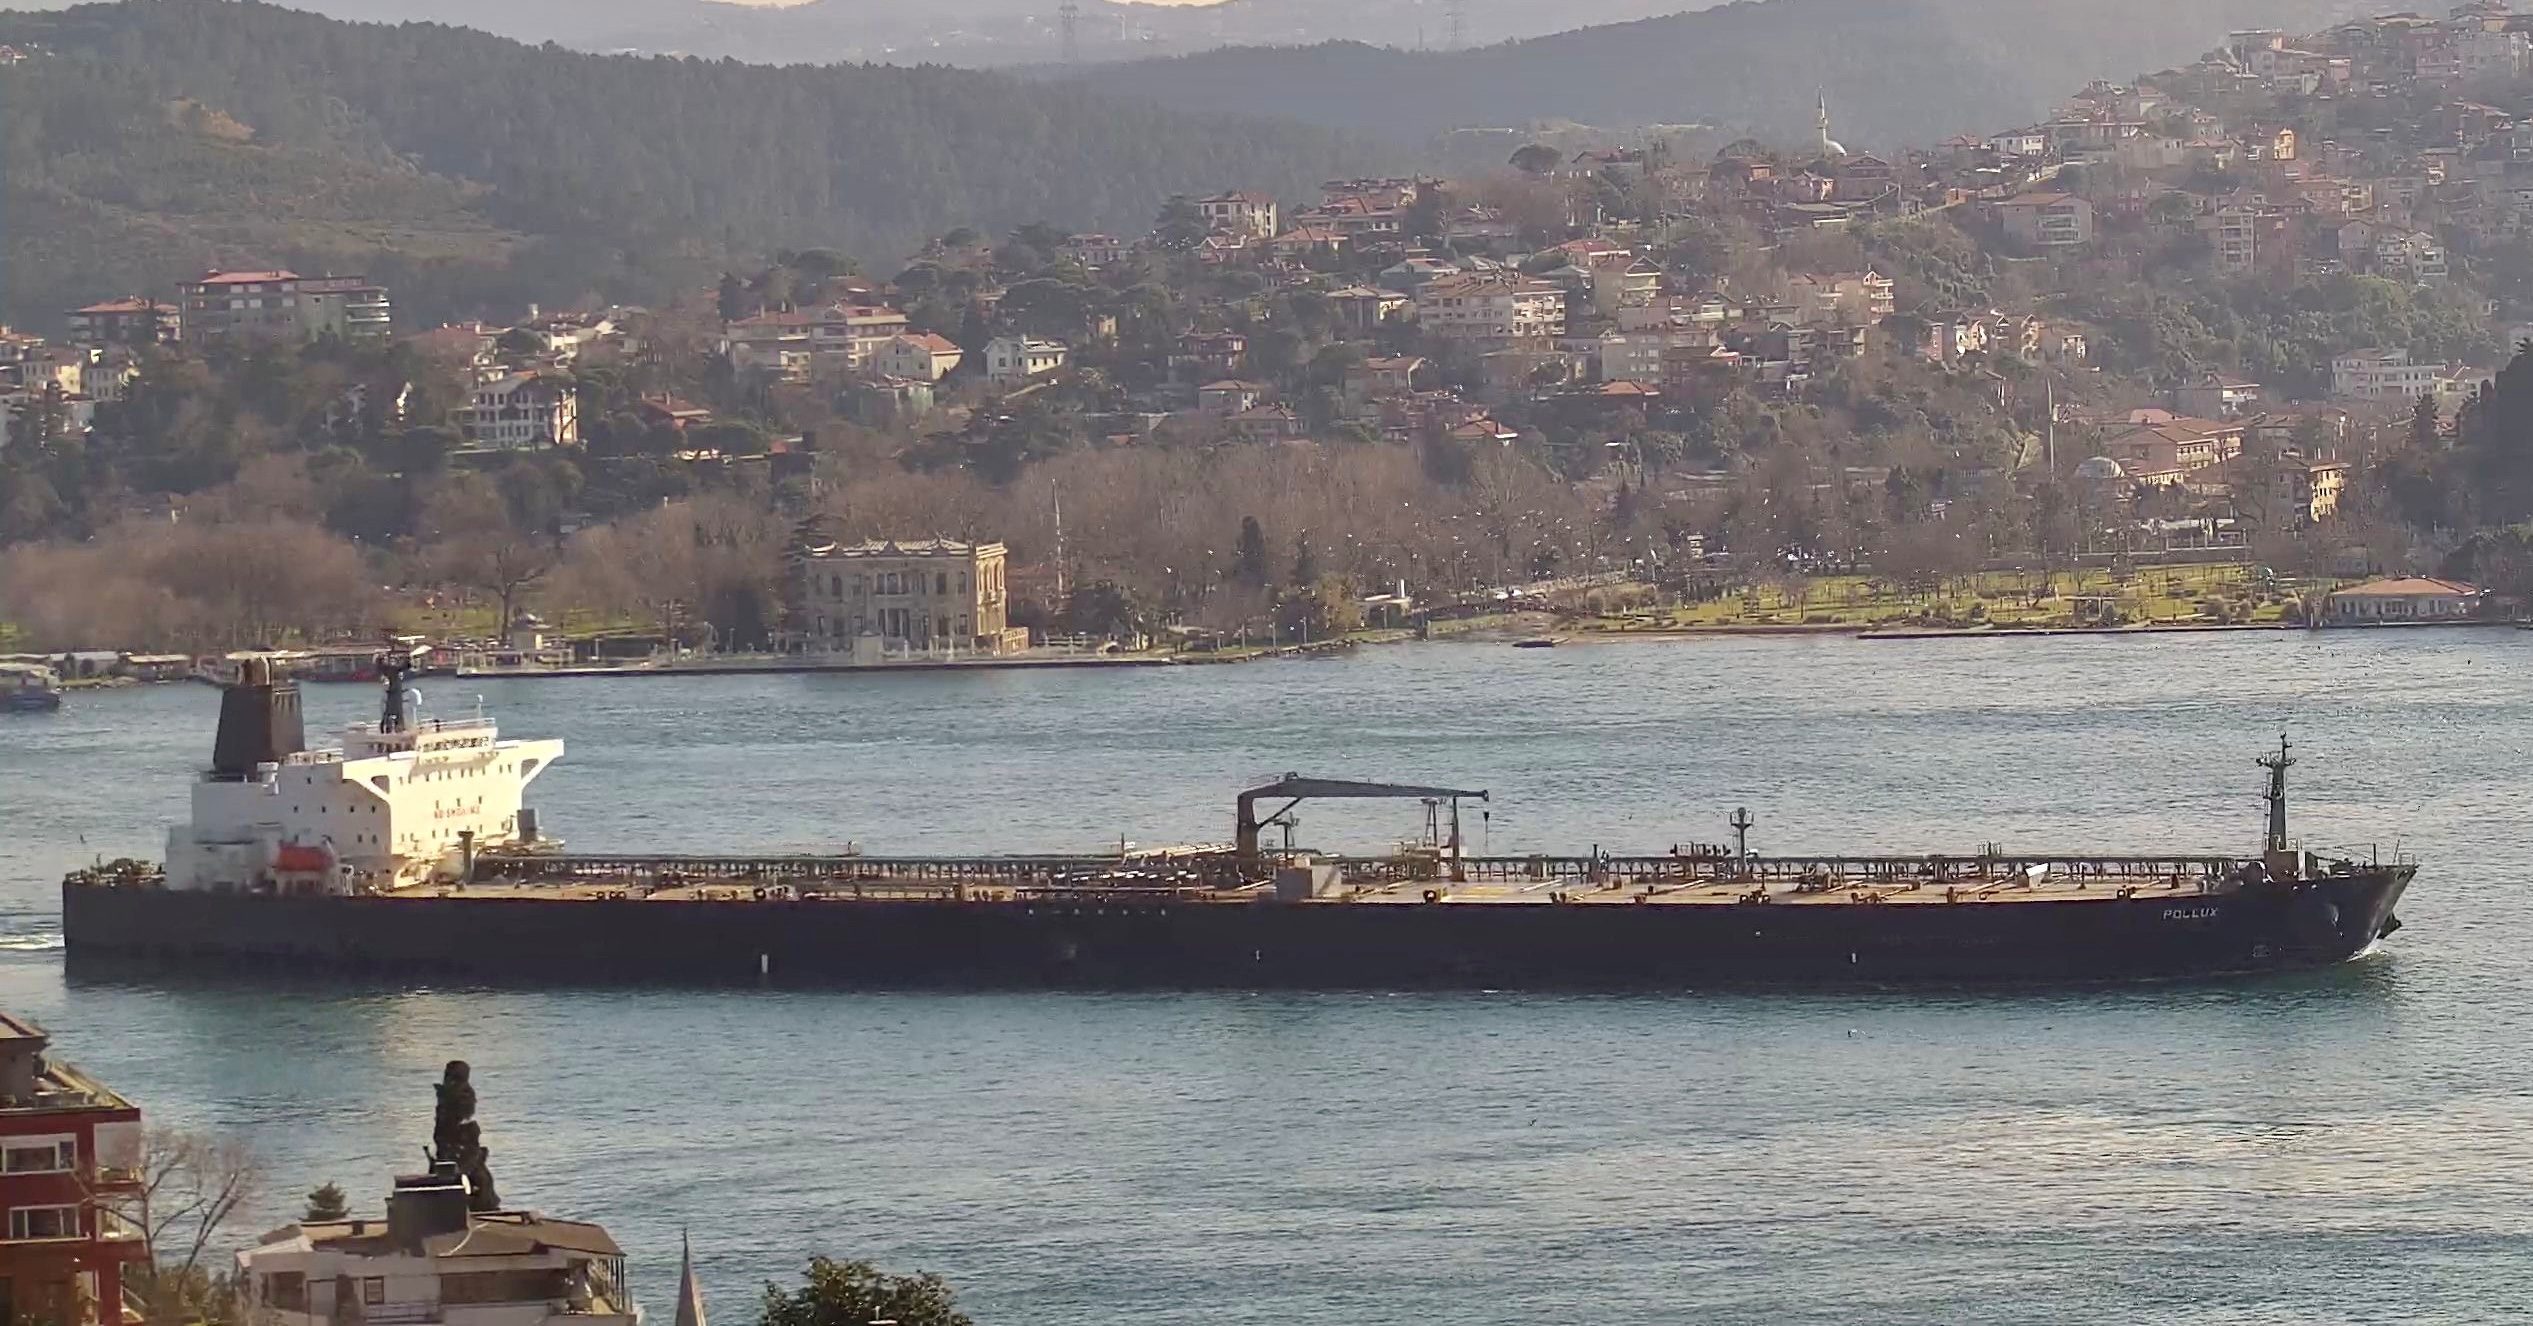 Panama-flagged crude oil tanker Pollux transits. REUTERS/Yoruk Isik